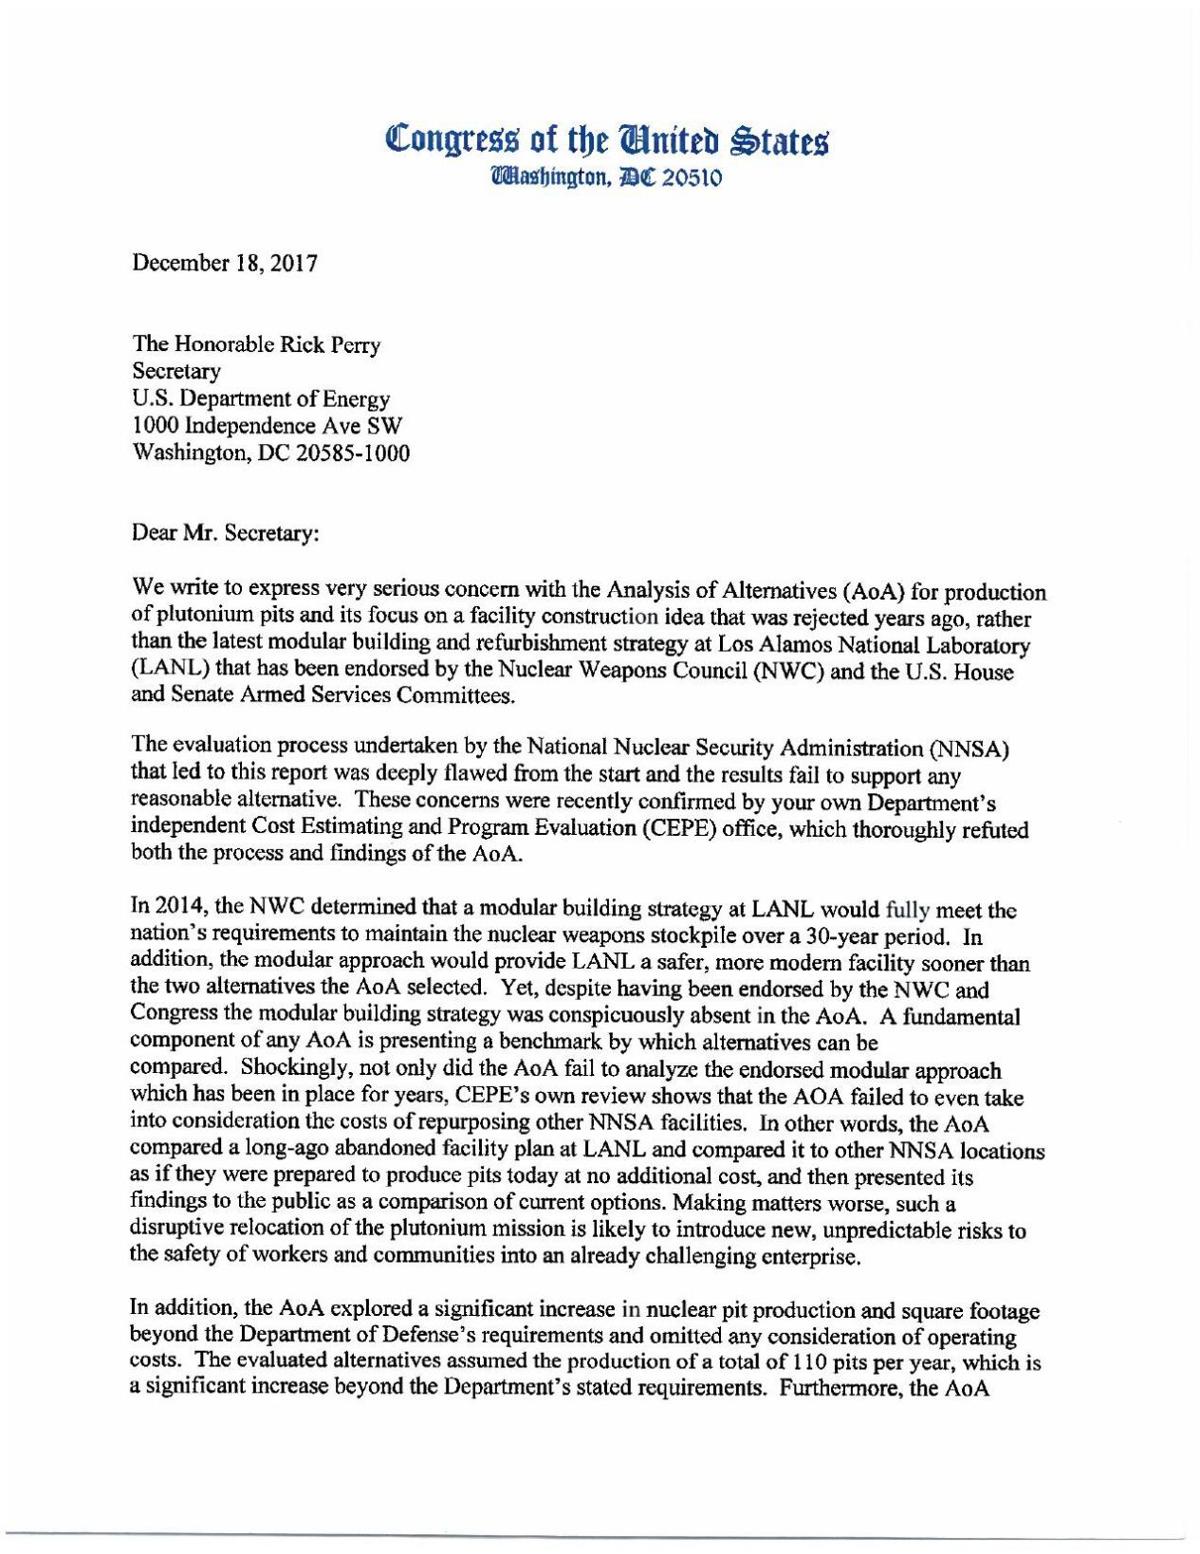 Letter to DOE Secretary Rick Perry